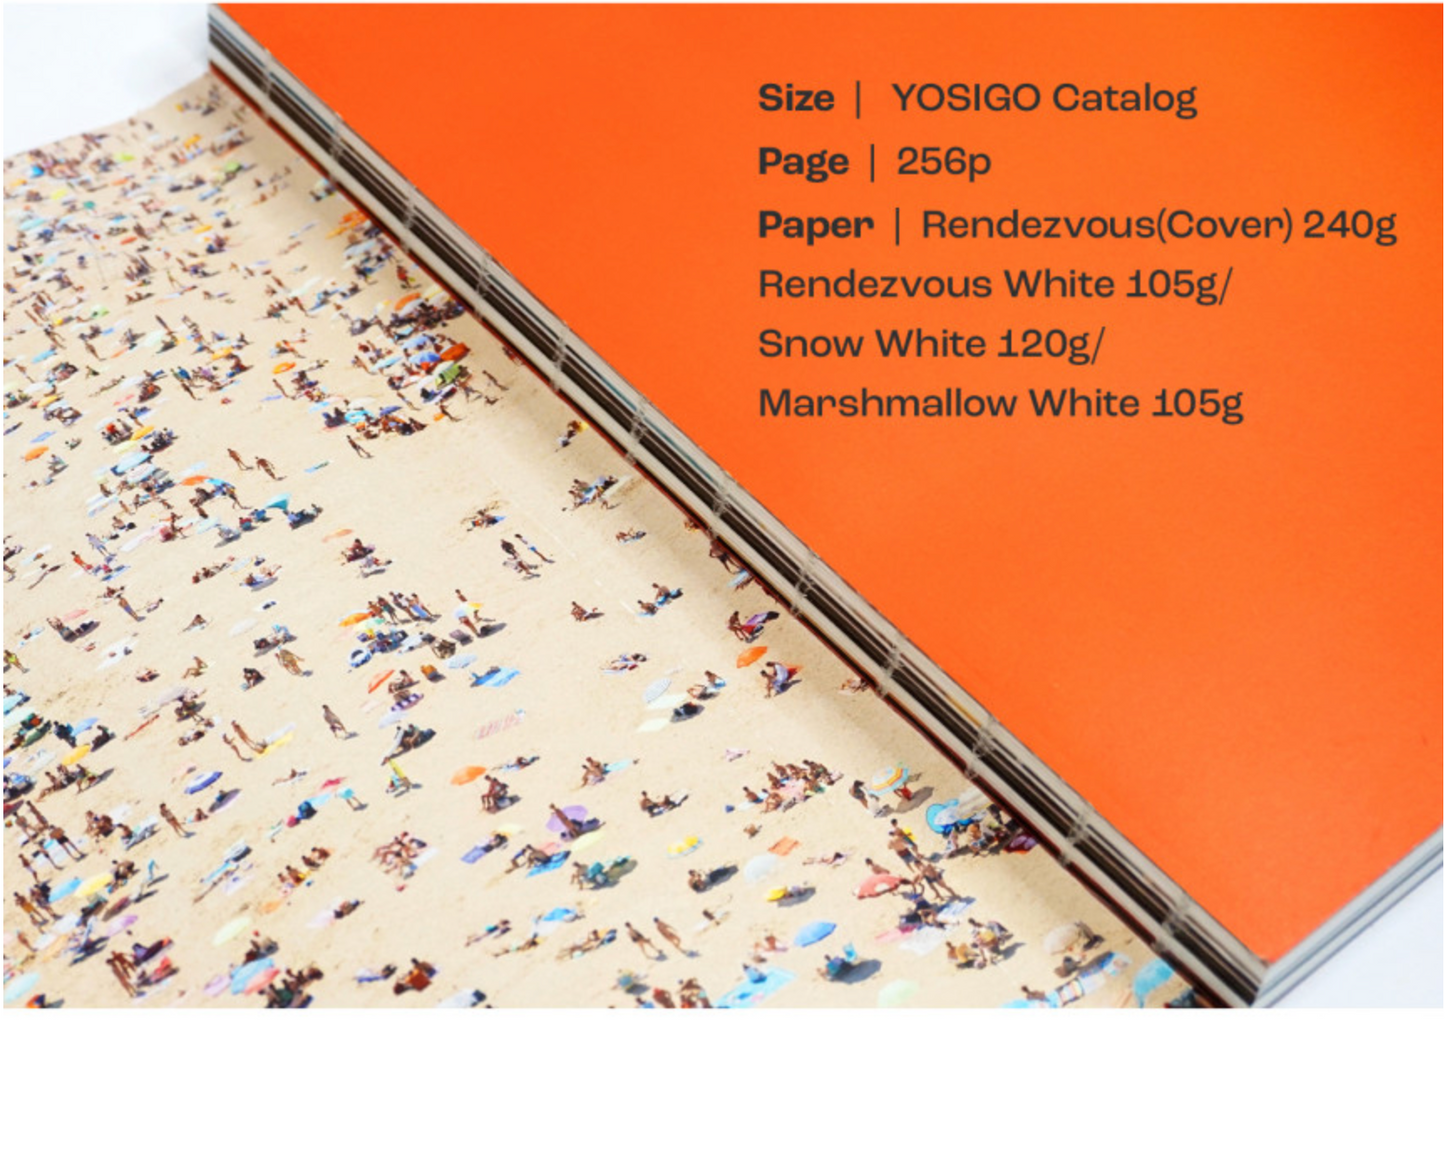 YOSIGO Solo Exhibition Catalog 2021 Seoul